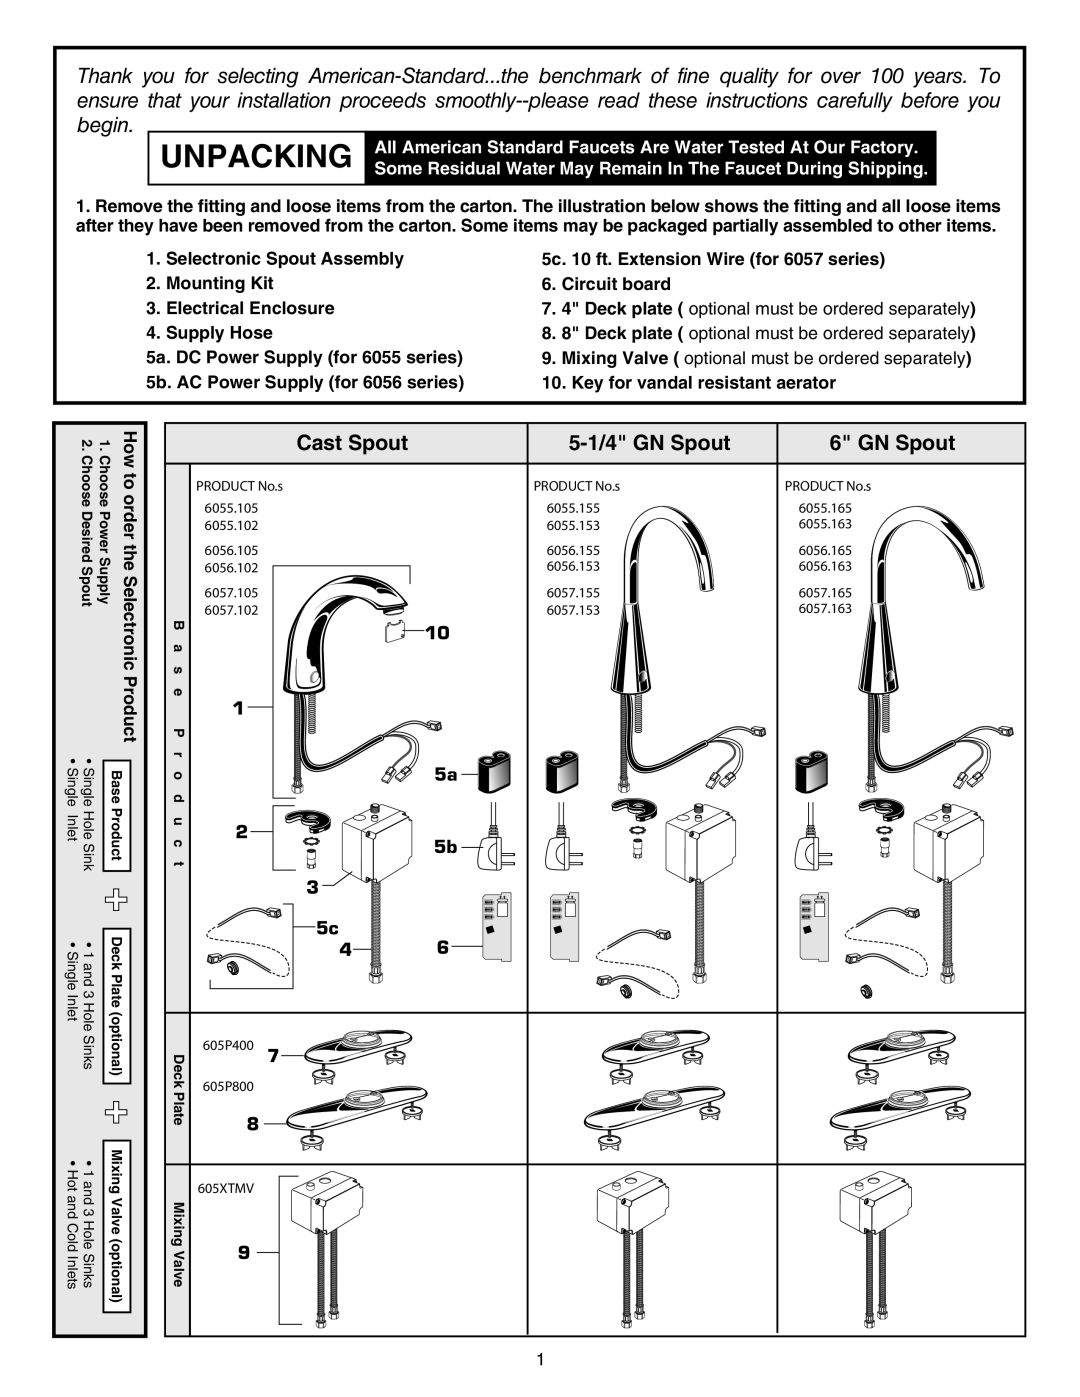 American Standard Proximity Faucet Unpacking, Cast Spout, 5-1/4GN Spout, Selectronic Spout Assembly, Mounting Kit, Product 